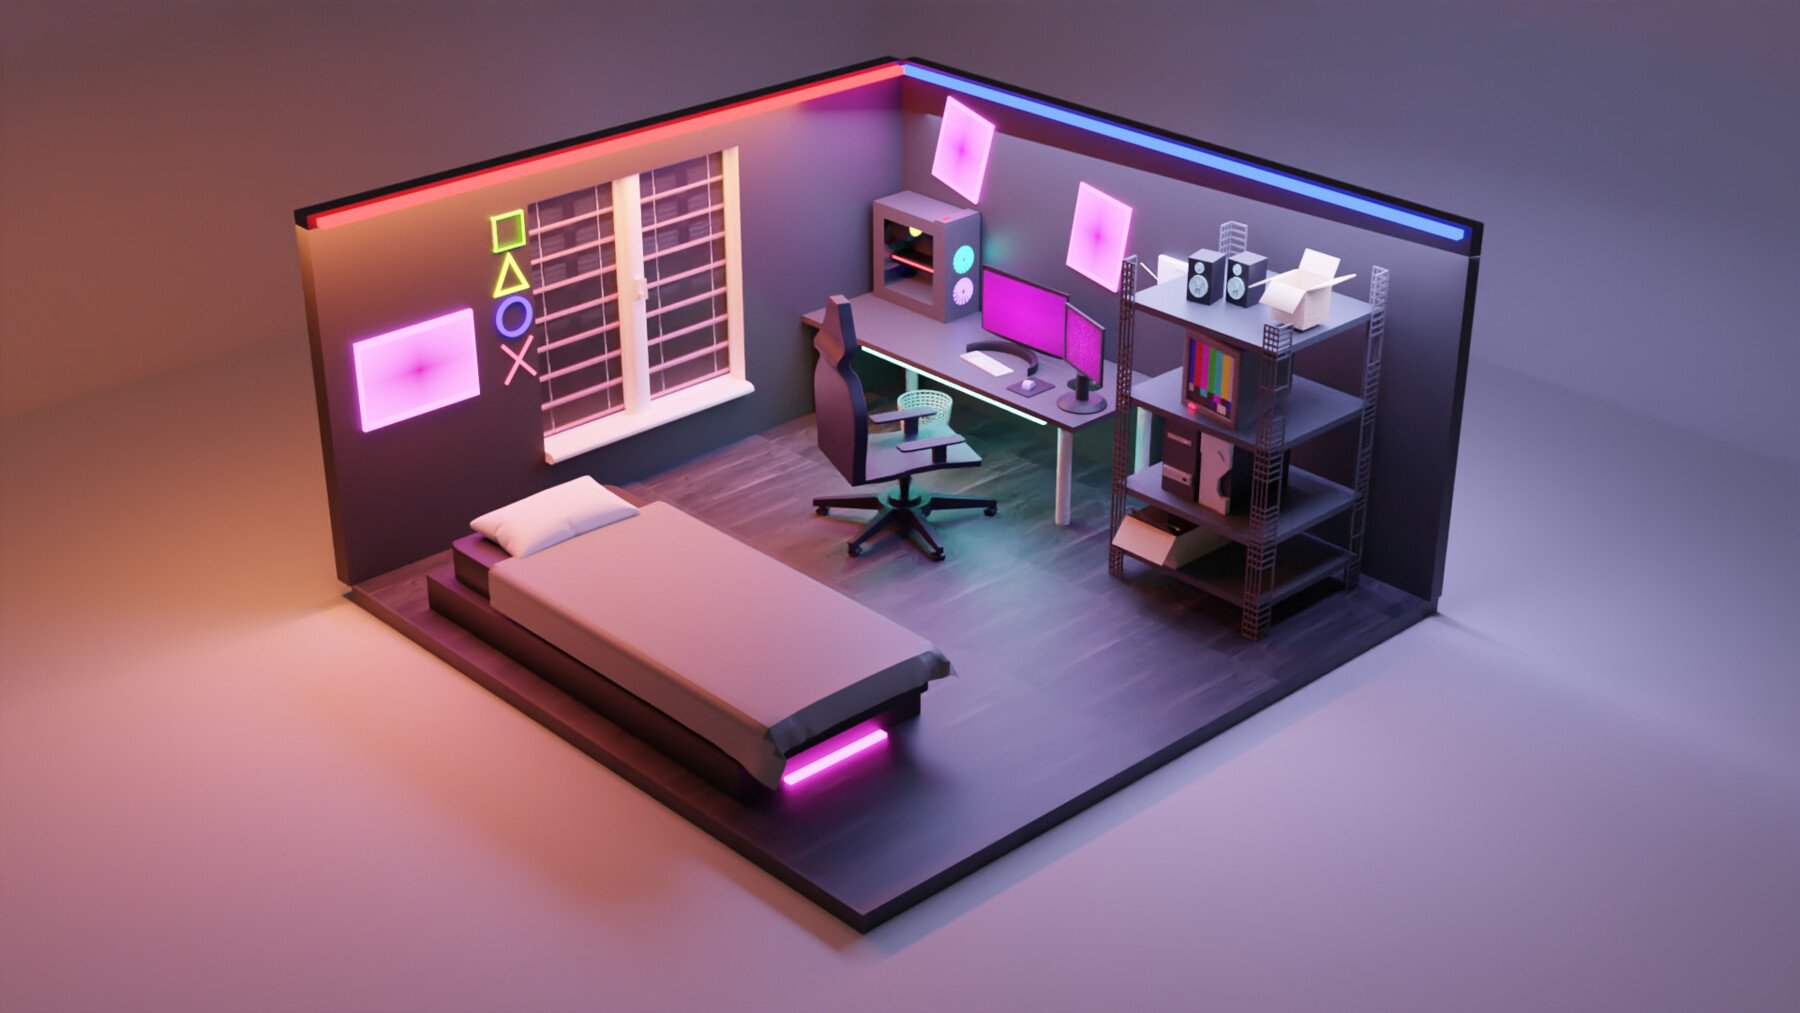 ArtStation - 3d isometric gaming room design | Game Assets